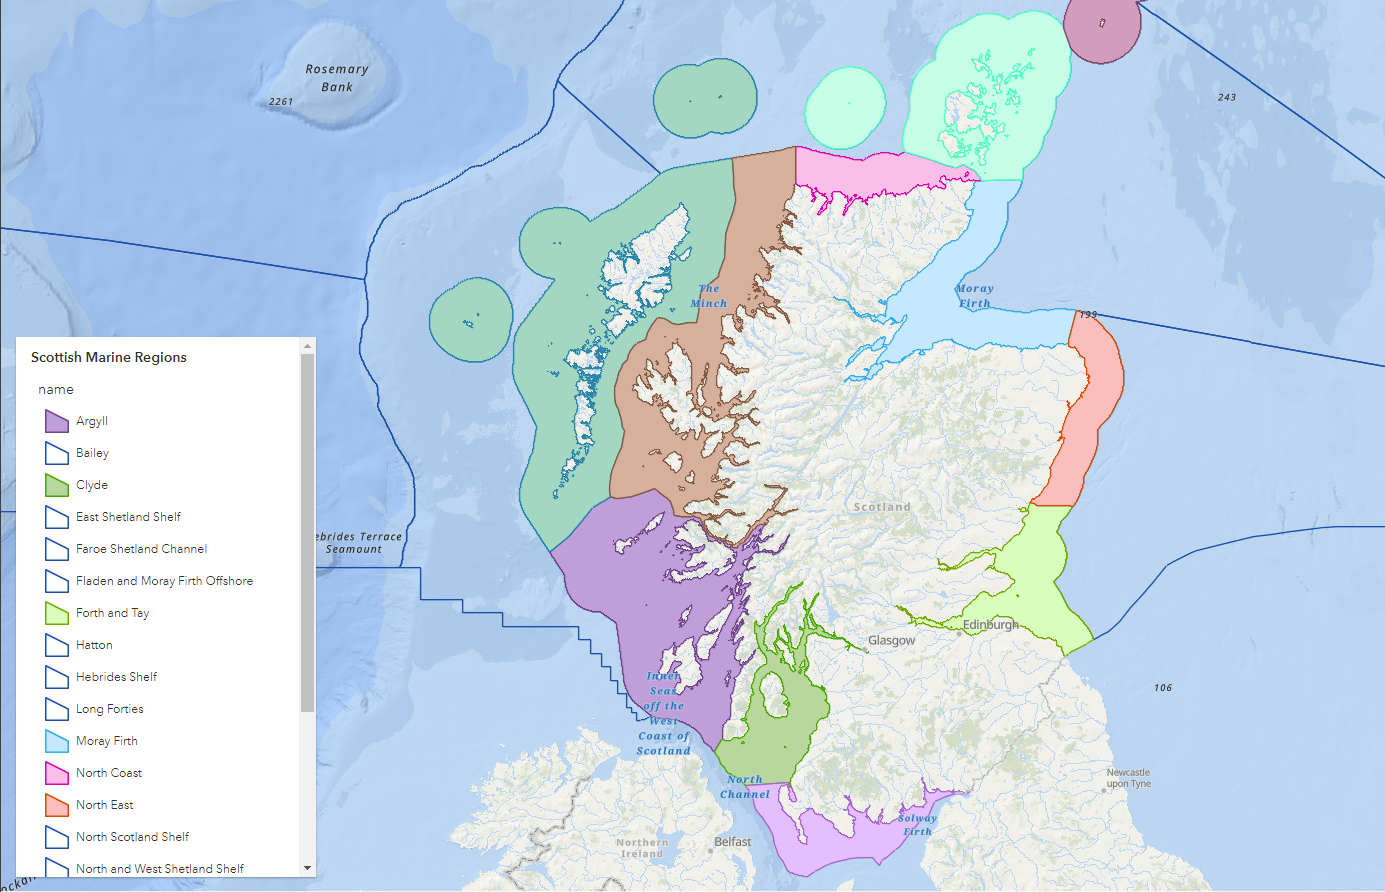 Scottish Marine Regions provided by Marine Scotland.